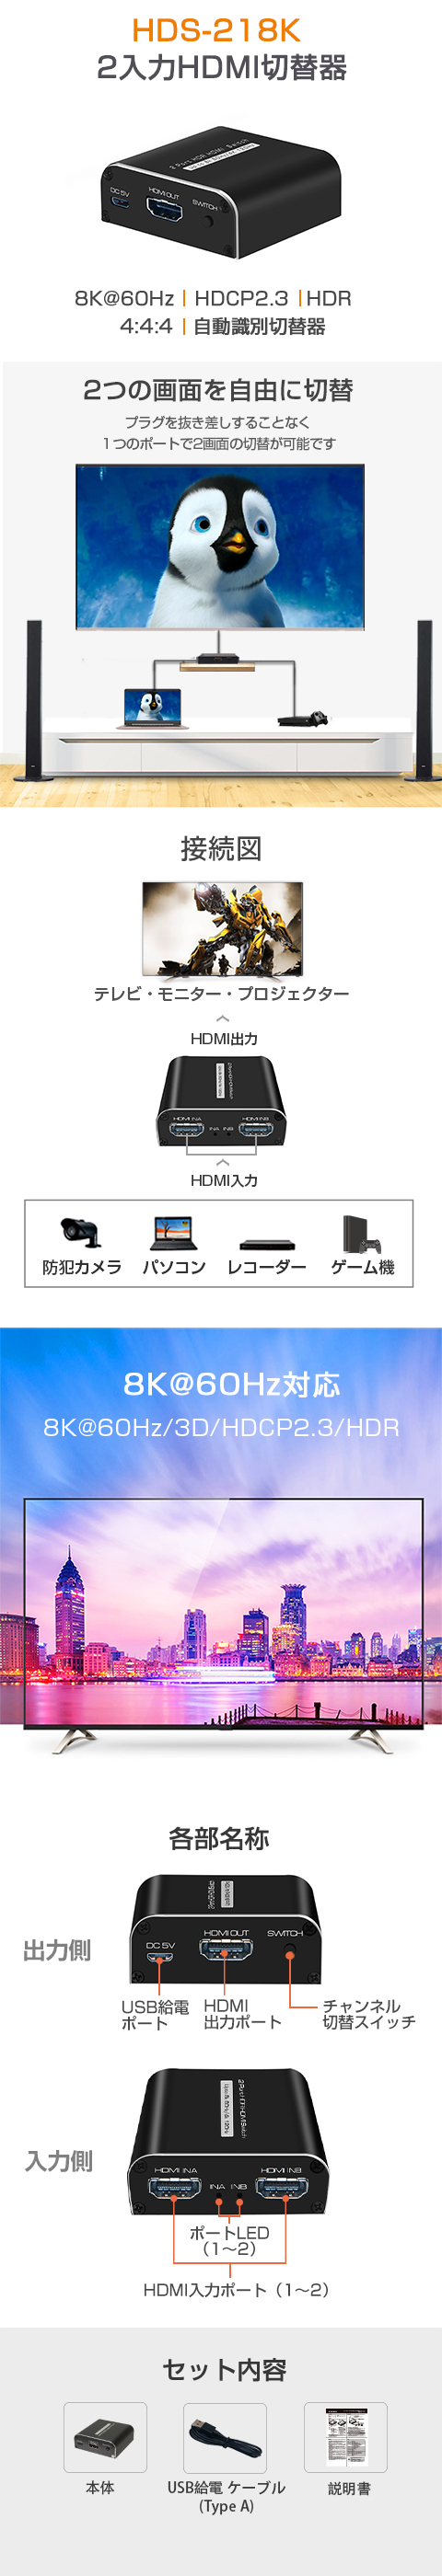 Nicoショップbrother スキャナー ADS-3600W (有線・無線LAN対応 ADF) スキャナー | main.chu.jp